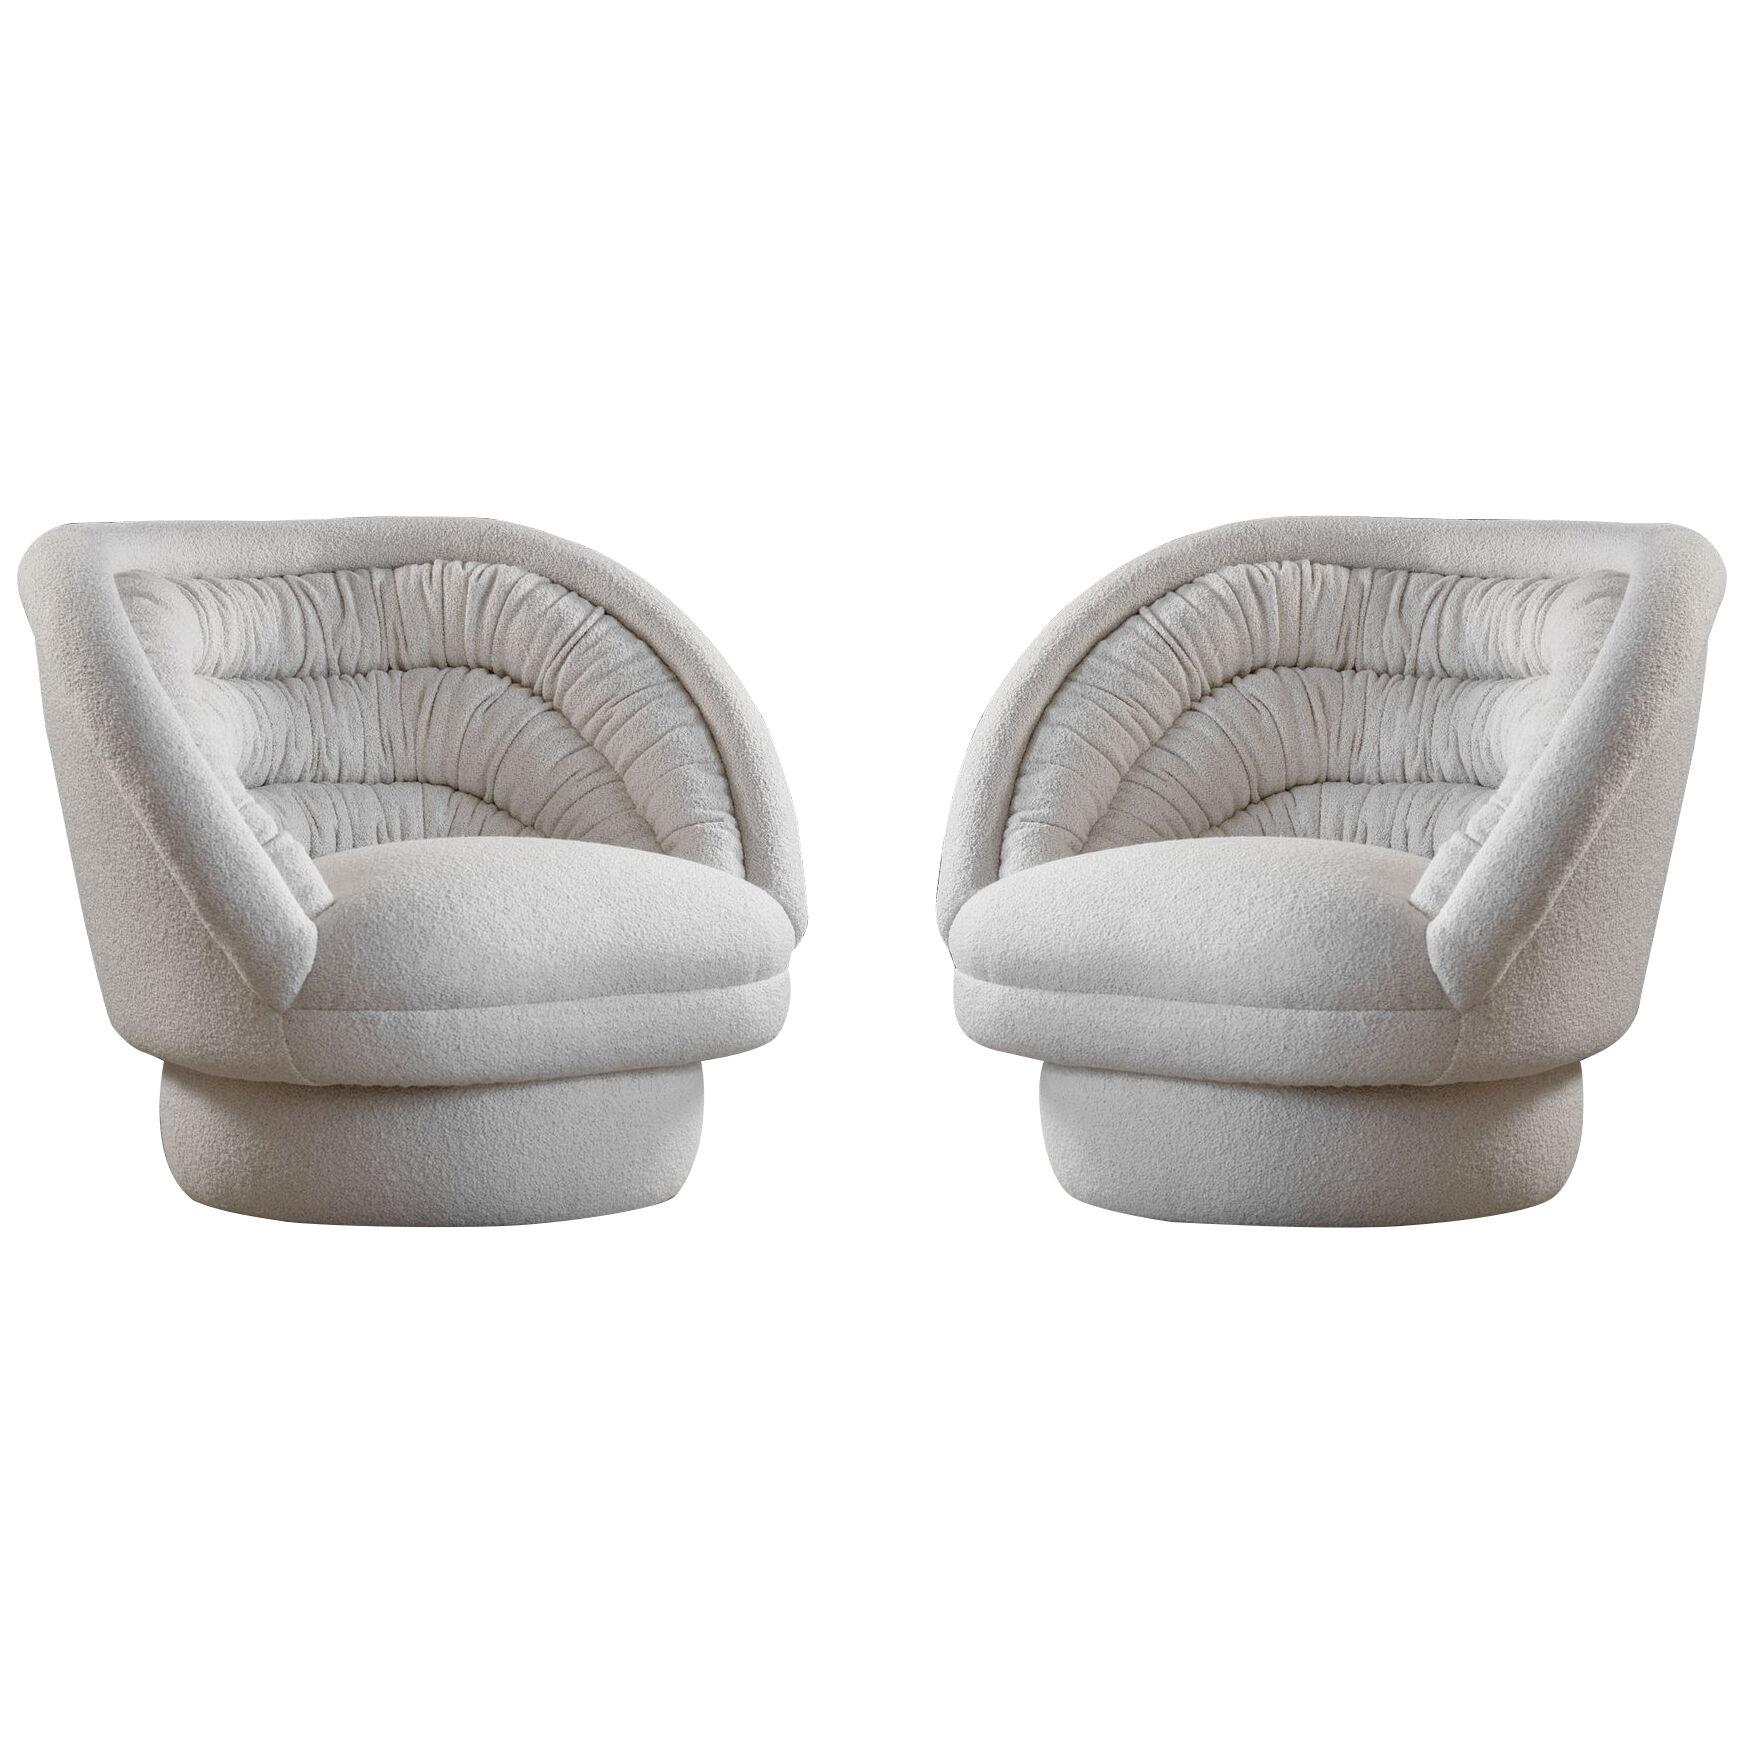 Vladimir Kagan Crescent Lounge Chairs in Italian White Boucle